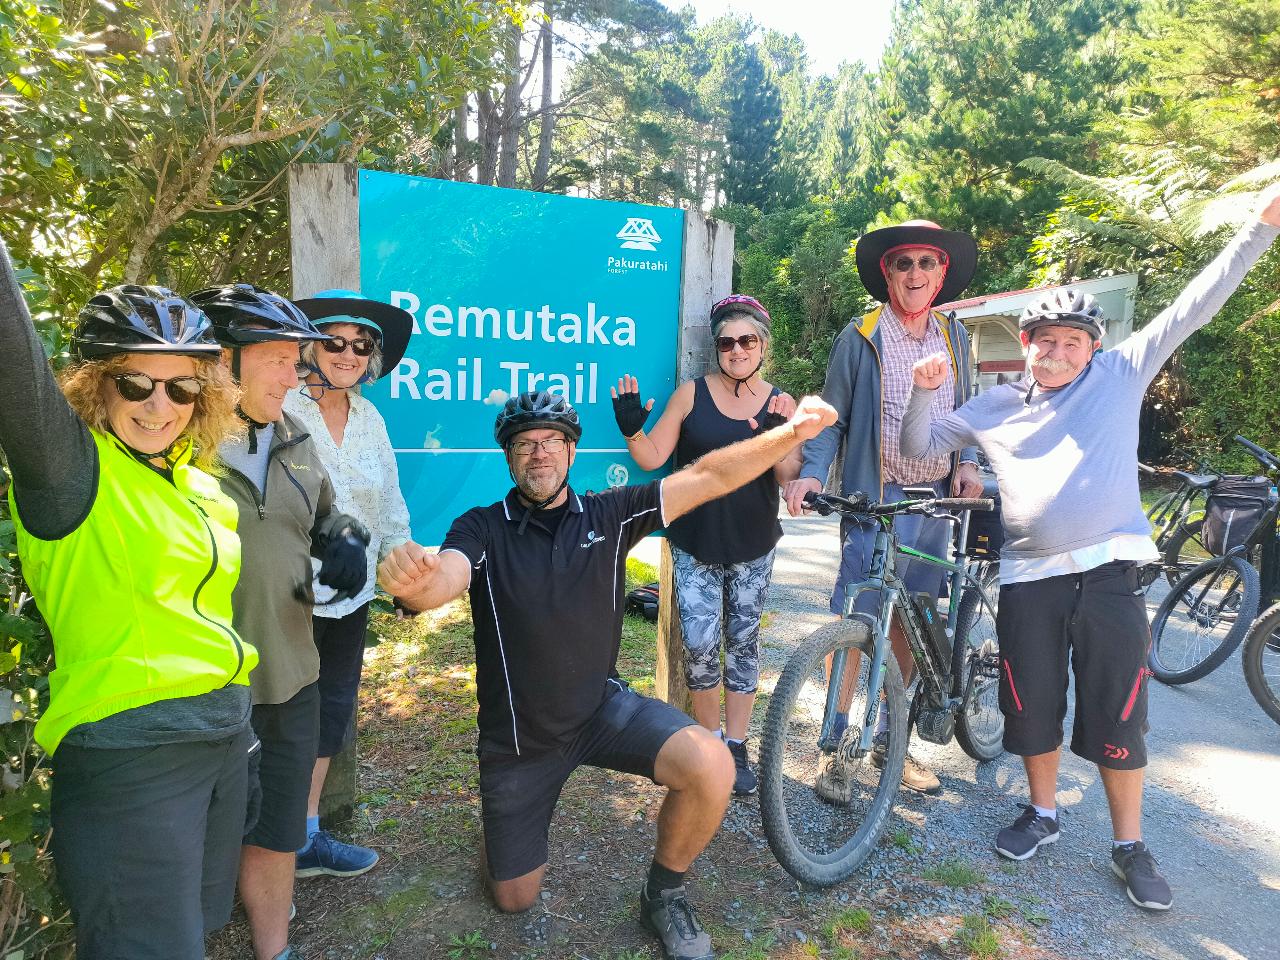 Remutaka Cycle Trail - Rail trail day ride